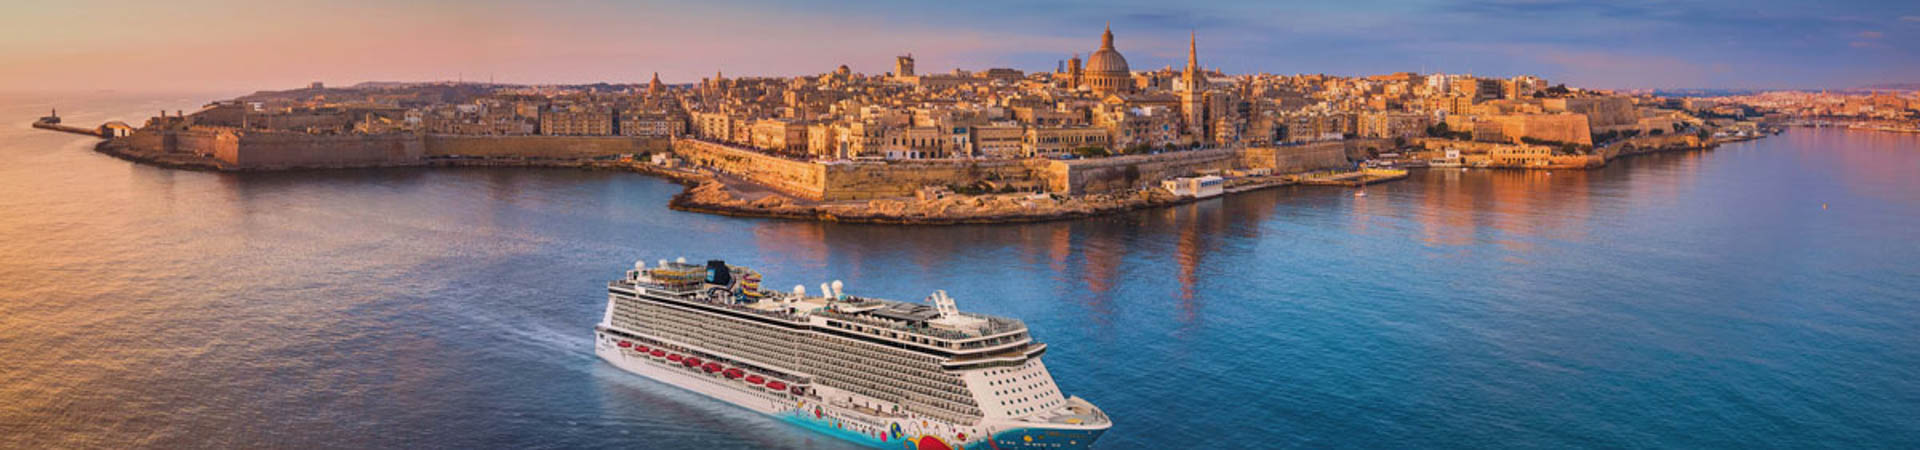 NCL ship in Valletta